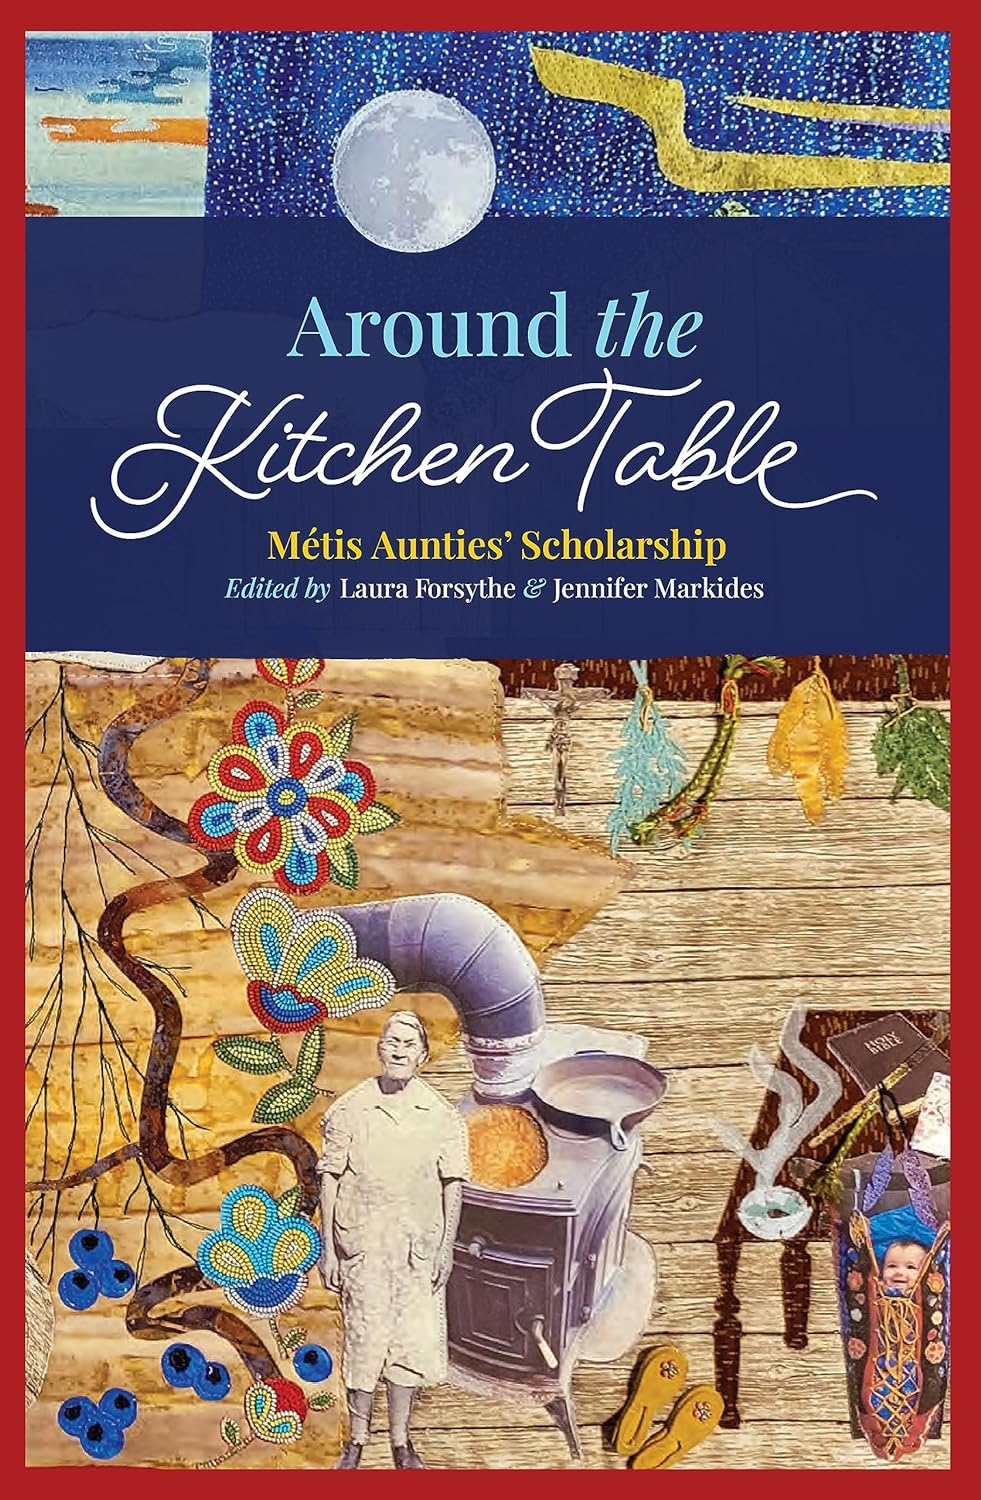 Around the Kitchen Table: Métis Aunties' Scholarship edited by Laura Forsythe & Jennifer Markides